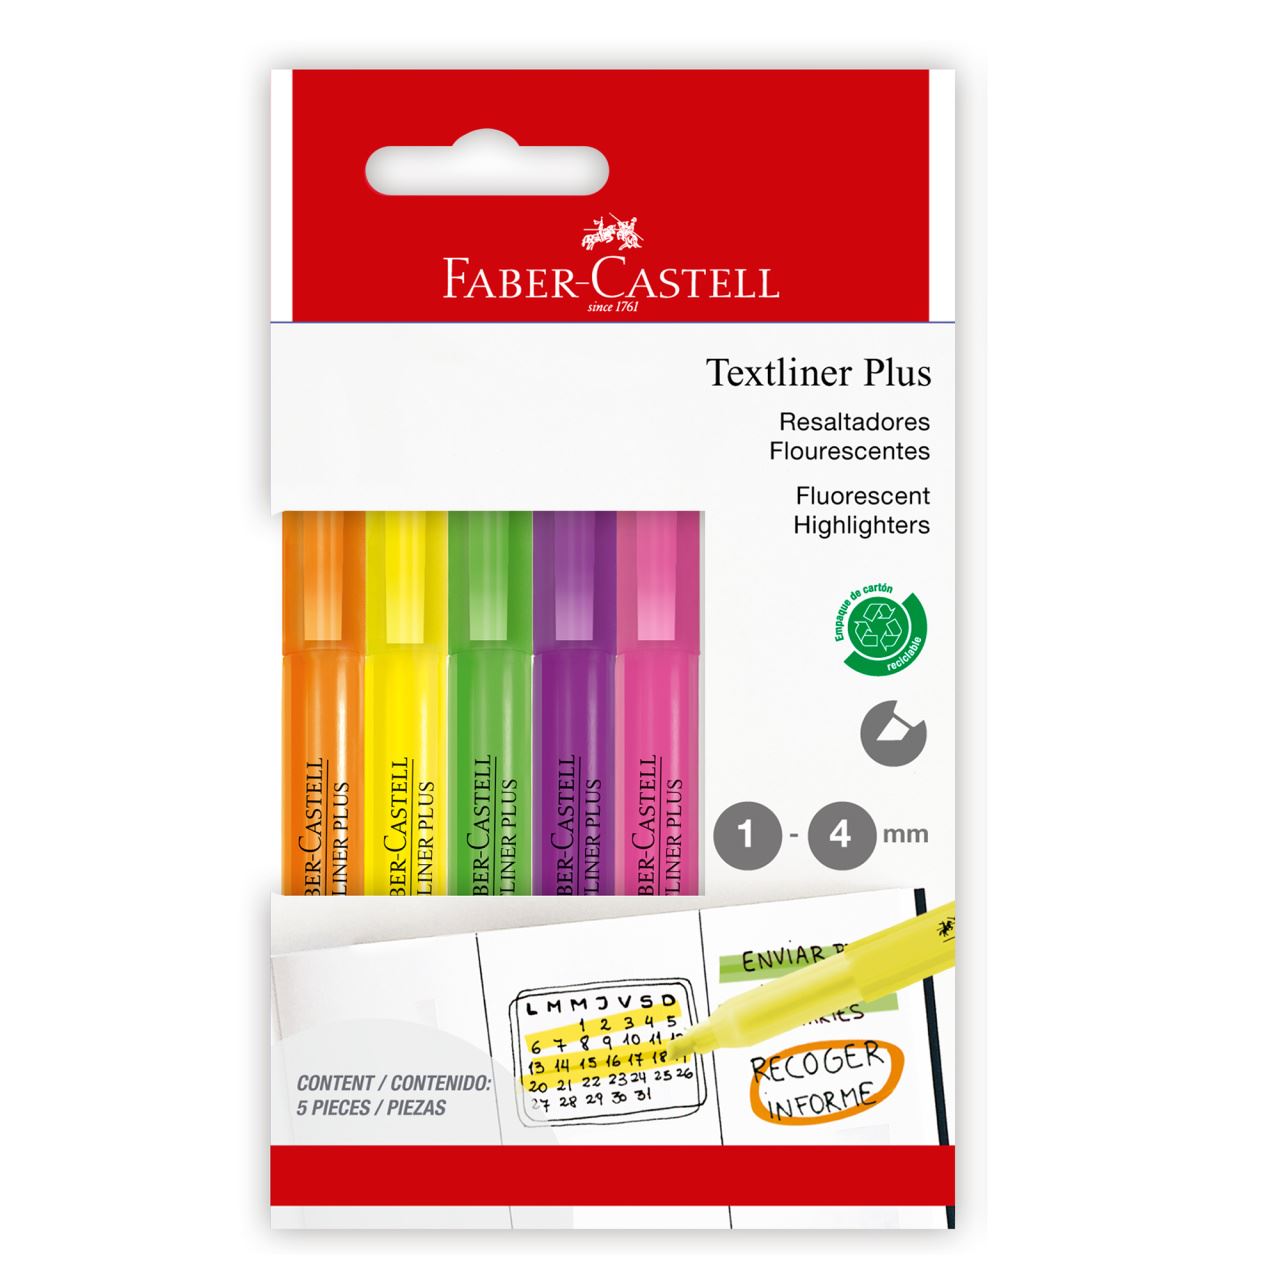 Faber-Castell - Resaltadores Textliner Plus cartón x 5 colores